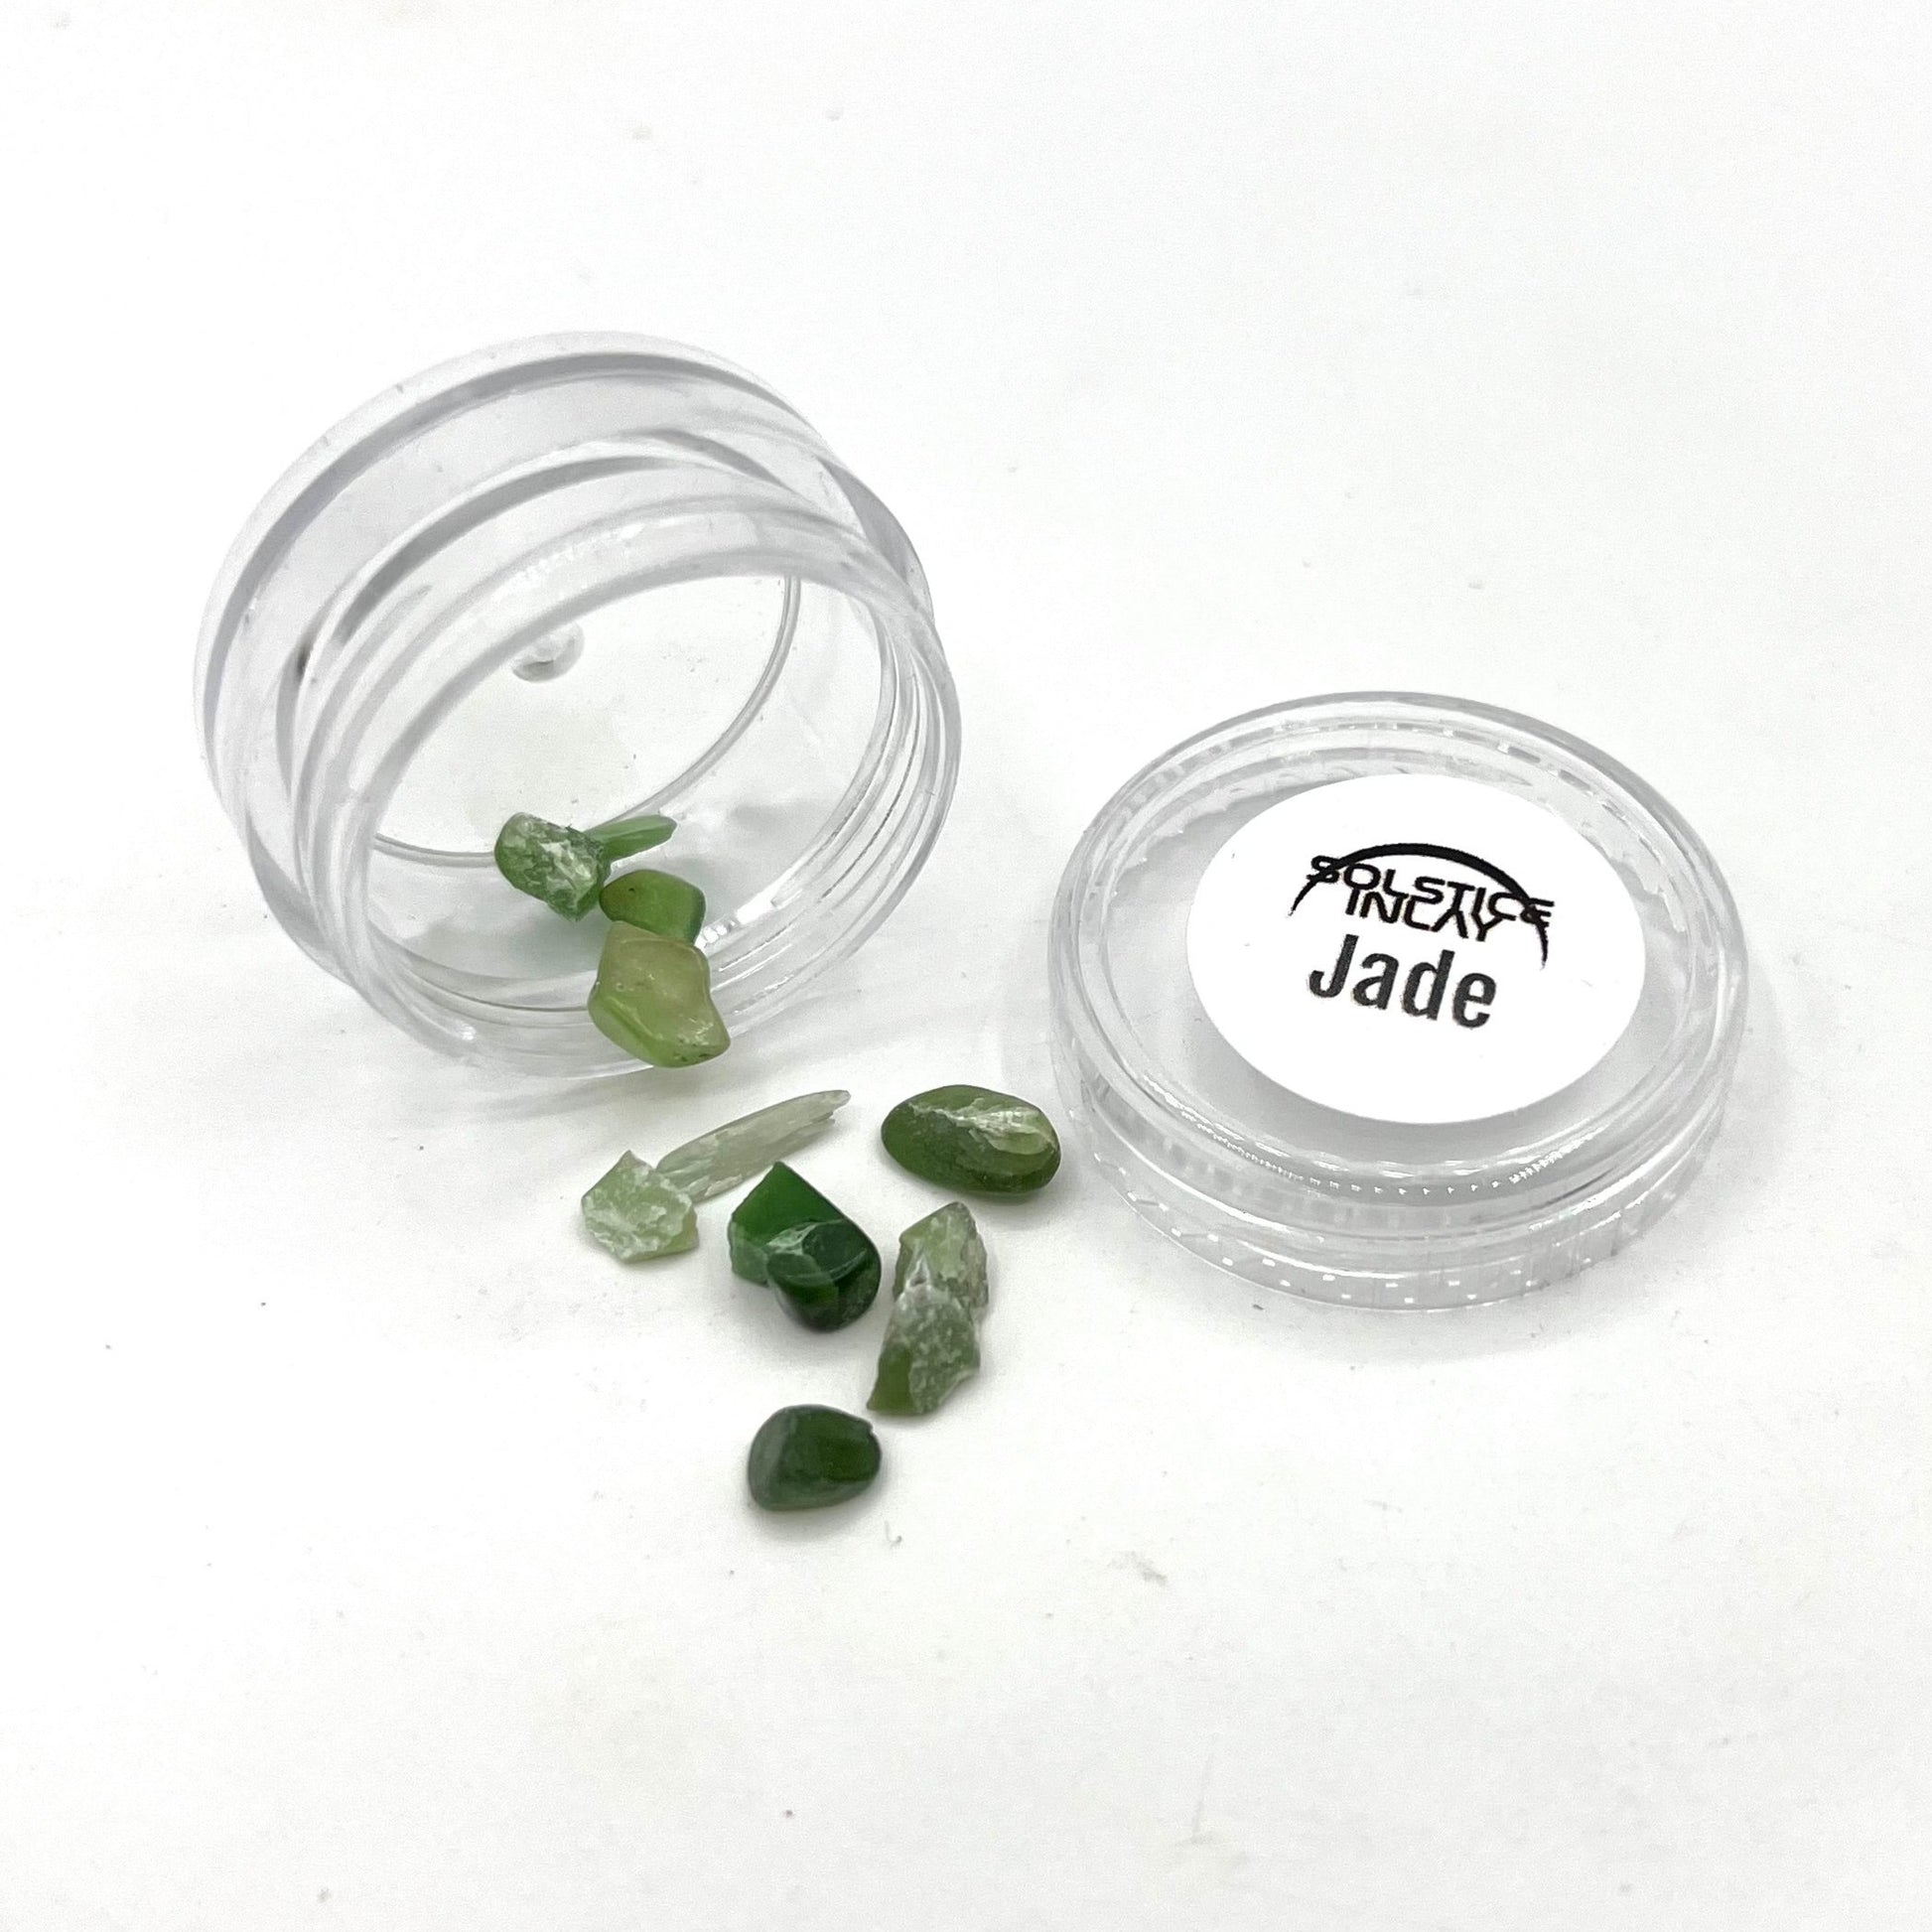 Jade Fragments - Patrick Adair Supplies